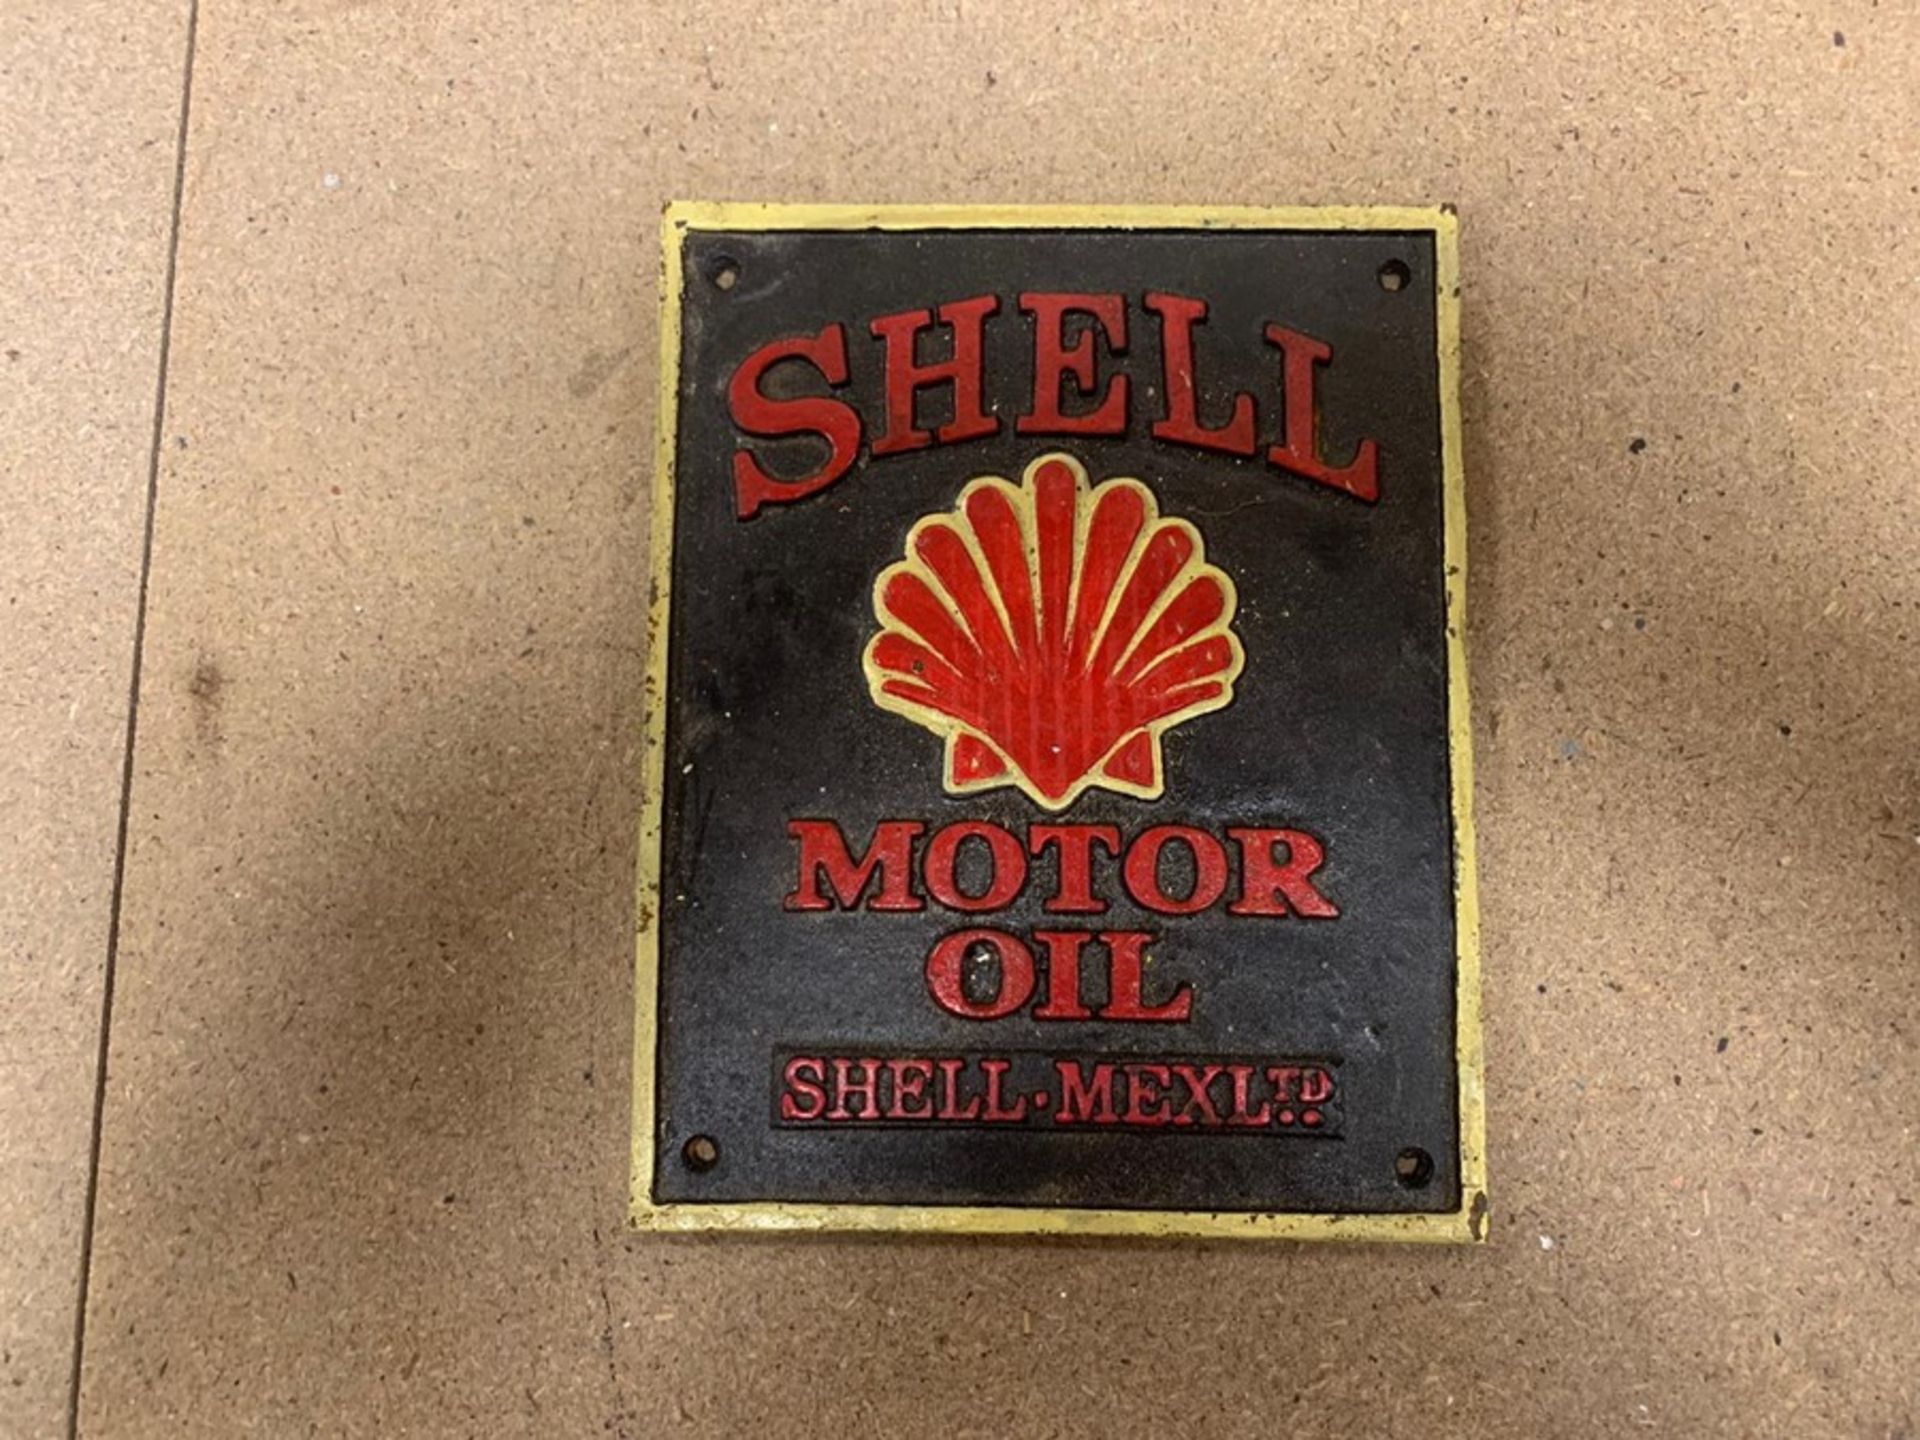 SHELL MOTOR OIL CAST IRON SIGN